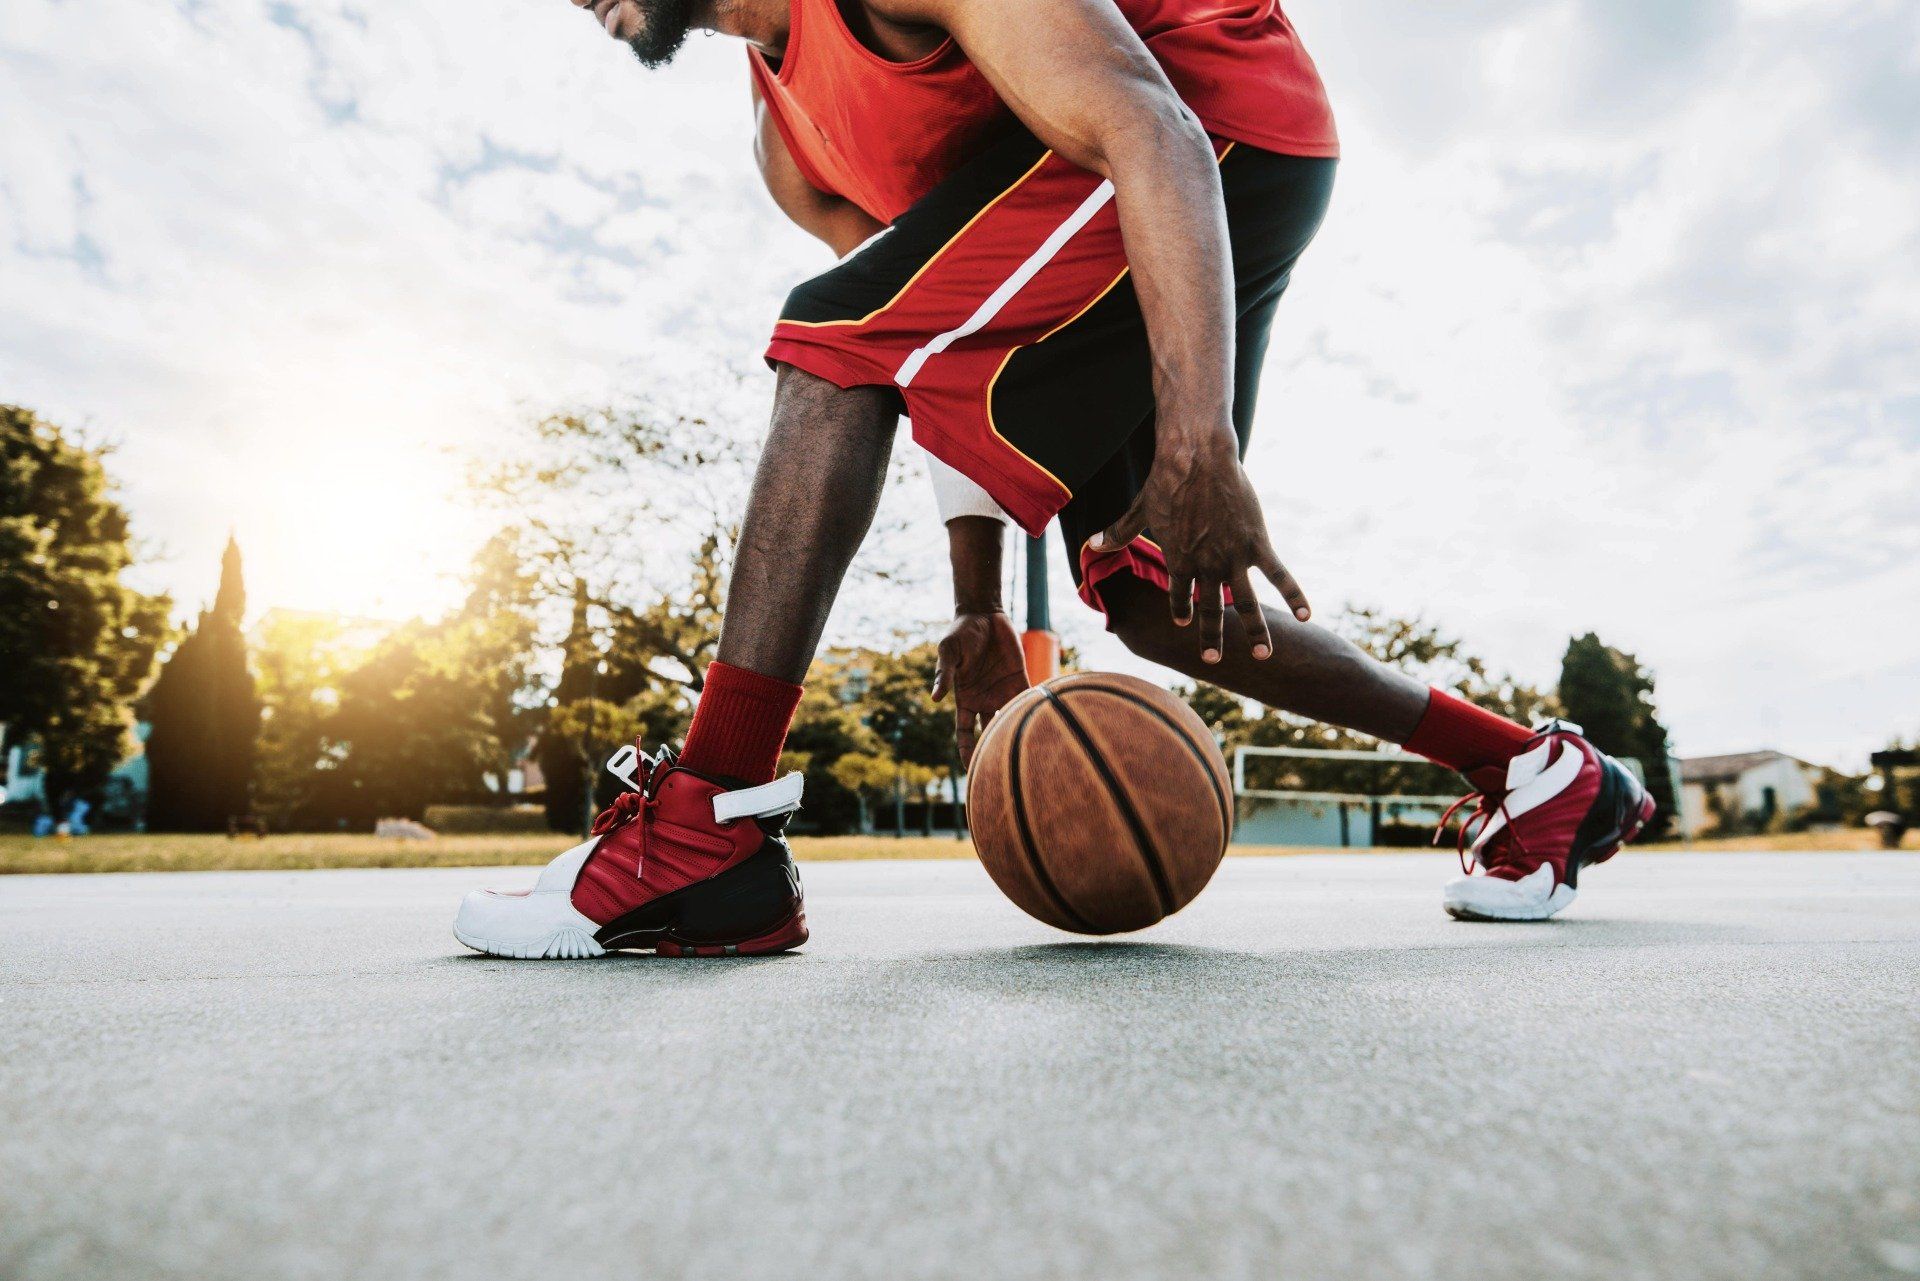 basketball player dribbling with ball on asphalt basketball court